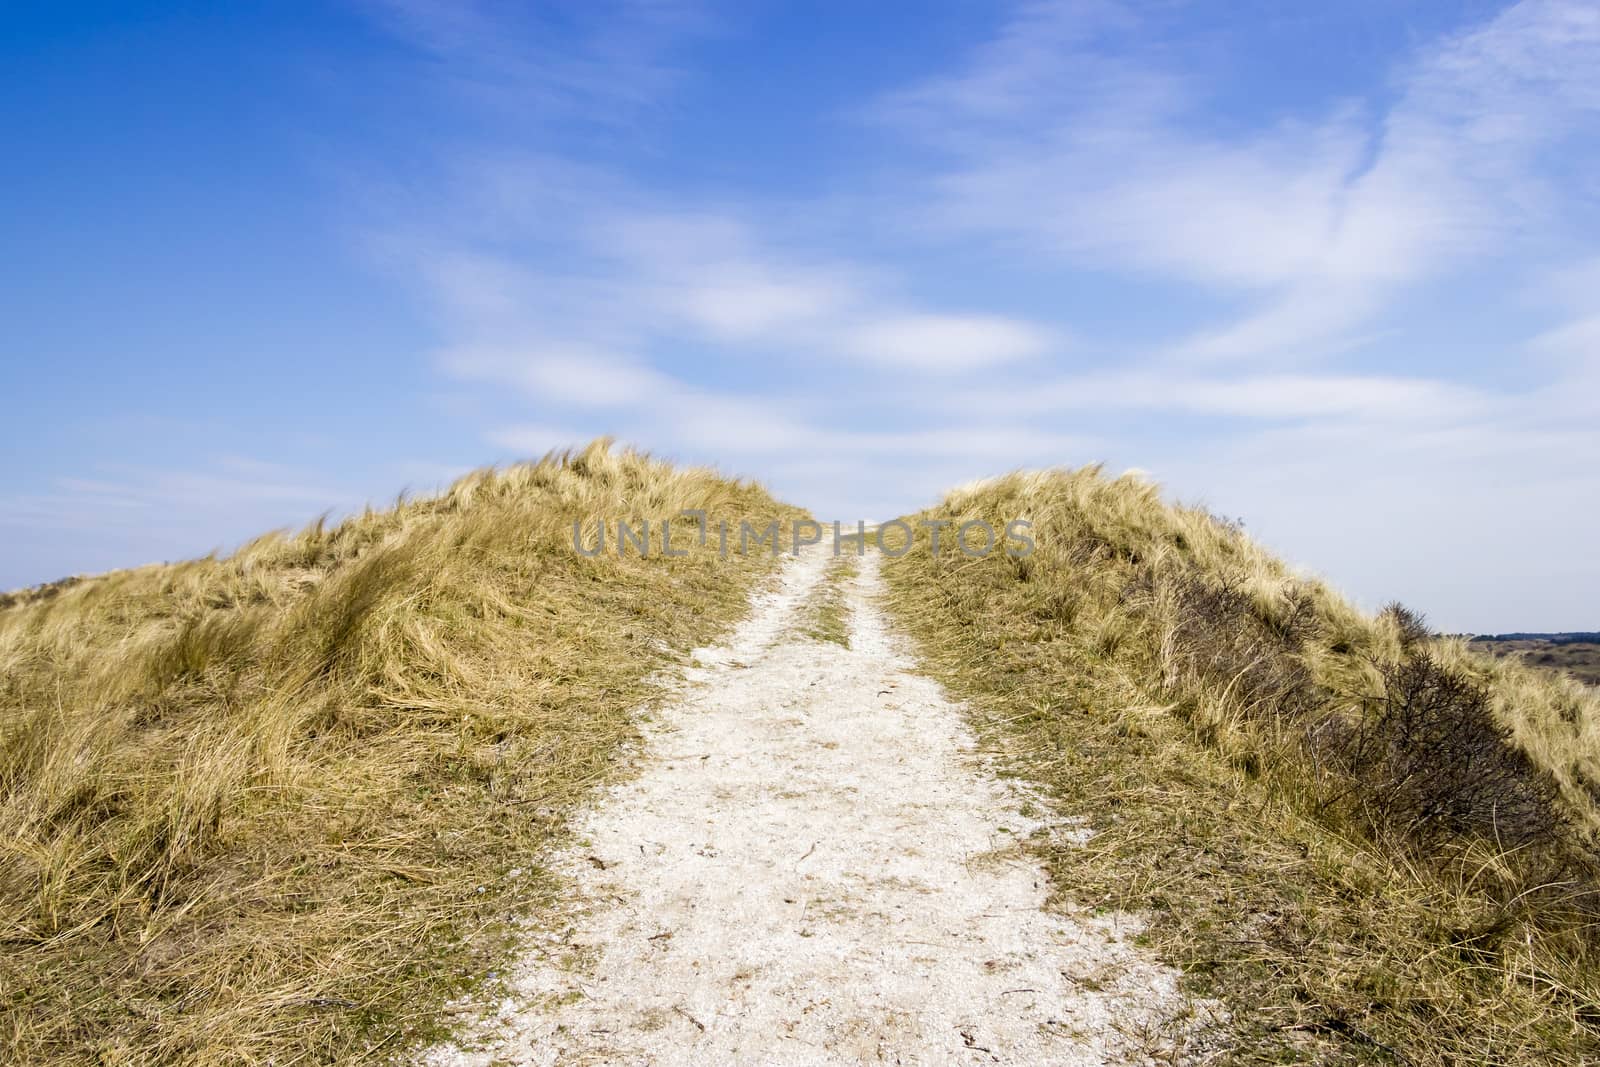 Road in dunes, National Park Zuid Kennemerland, The Netherlands